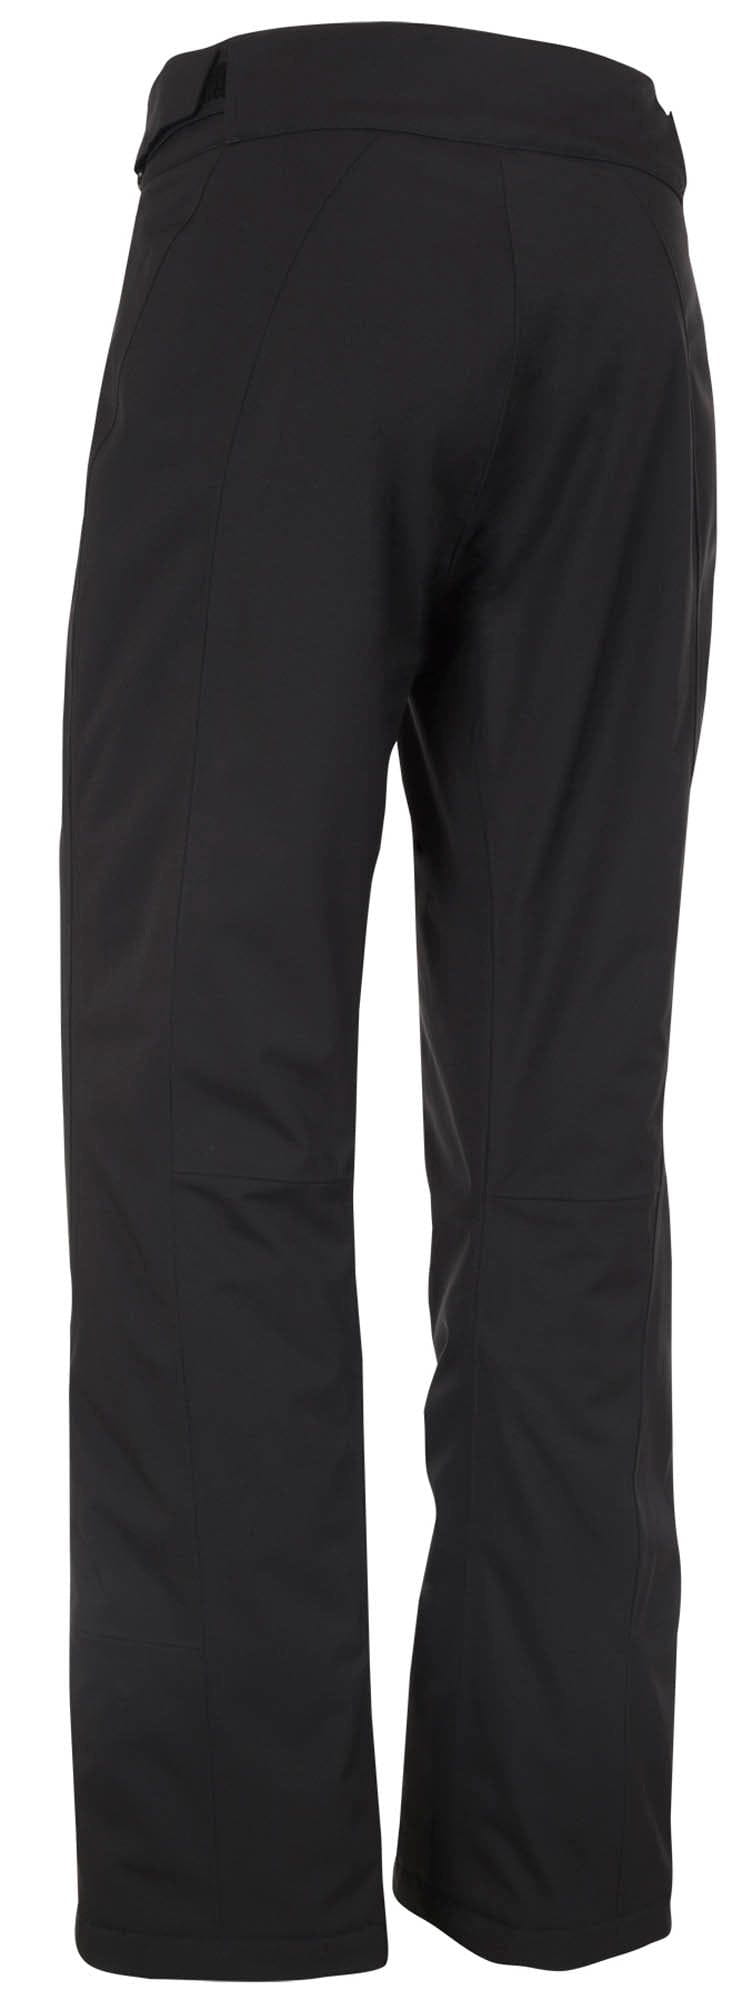 Sunice CLOTHING - Women - Outerwear - Pant Sunice *23W*  Women's Rachel Ski Pants - Inseam 33'' -